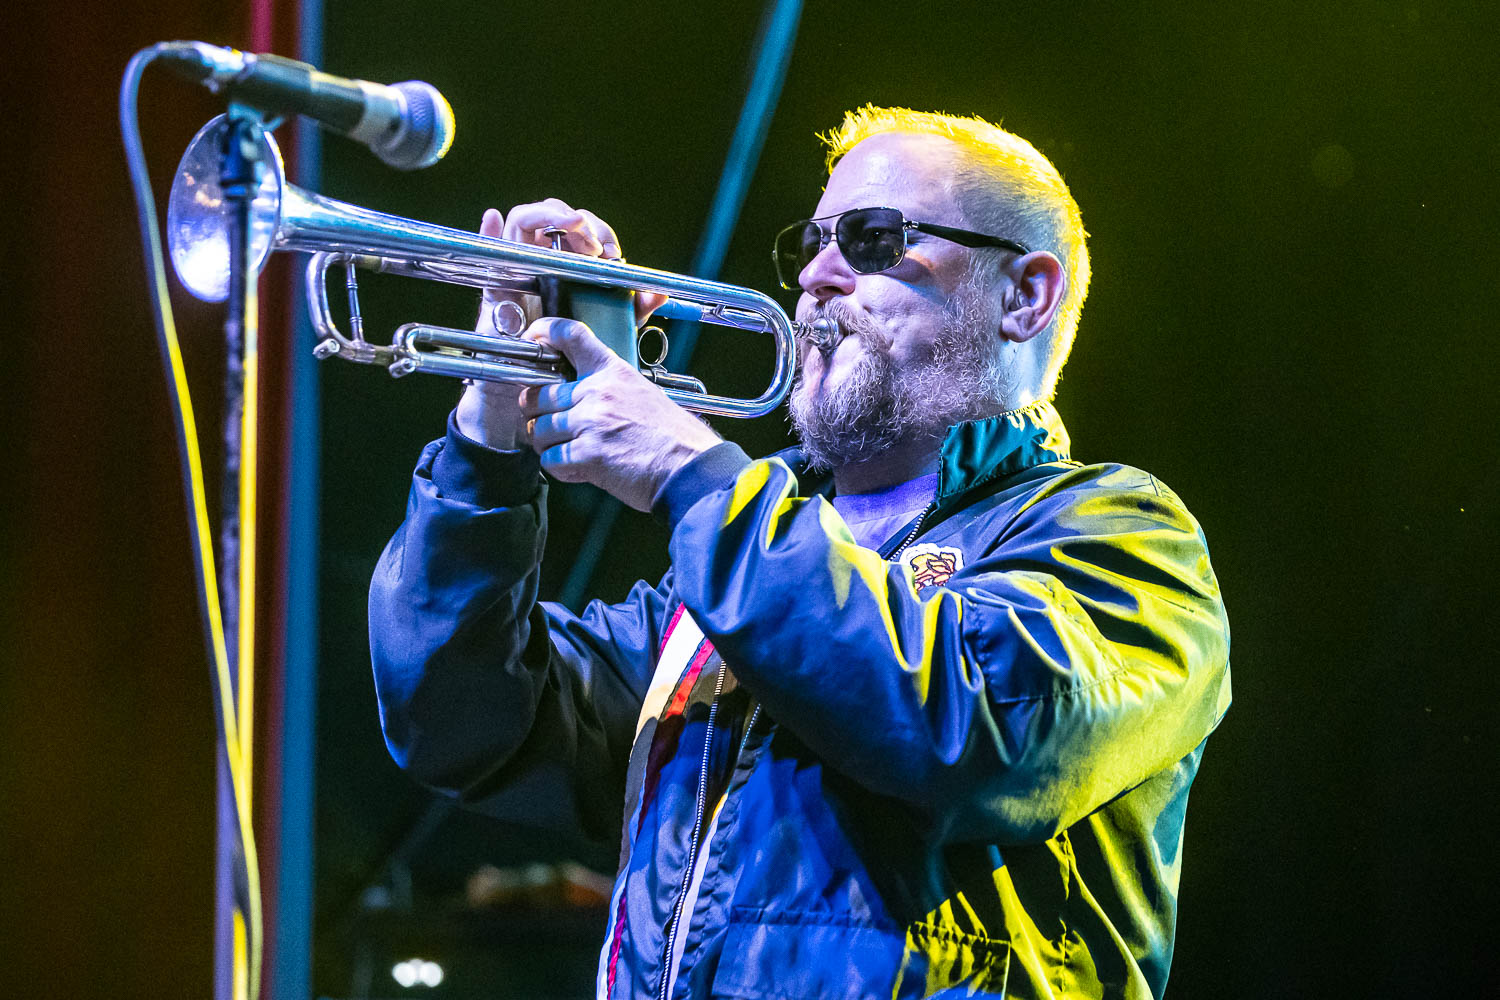 John Christianson, trumpet player of Reel Big Fish